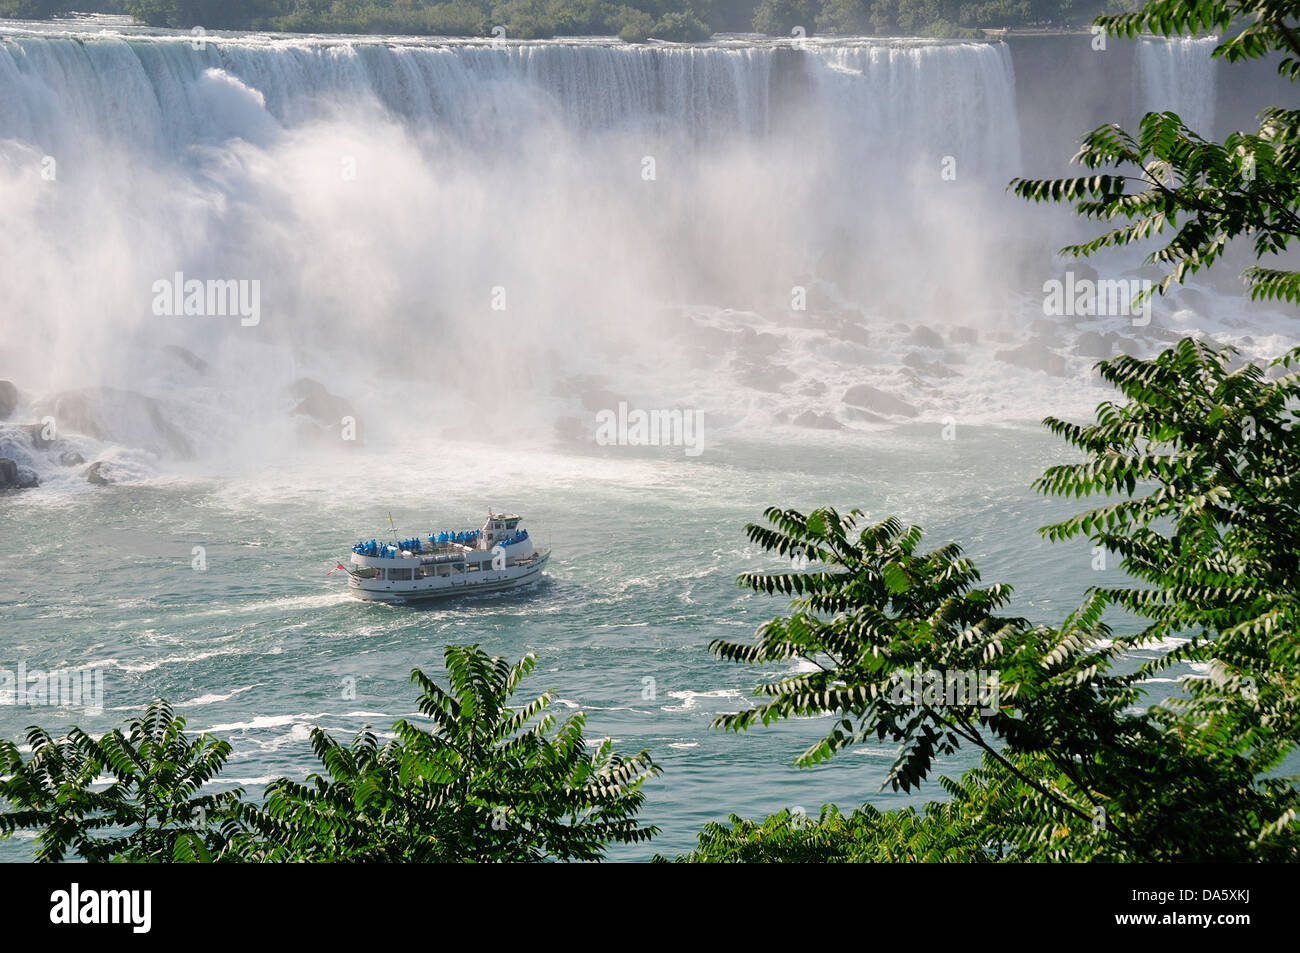 Canada, Niagara Falls, water, Ontario, Tour boat, giant falls, mist, tourism, waterfall, boat, Stock Photo